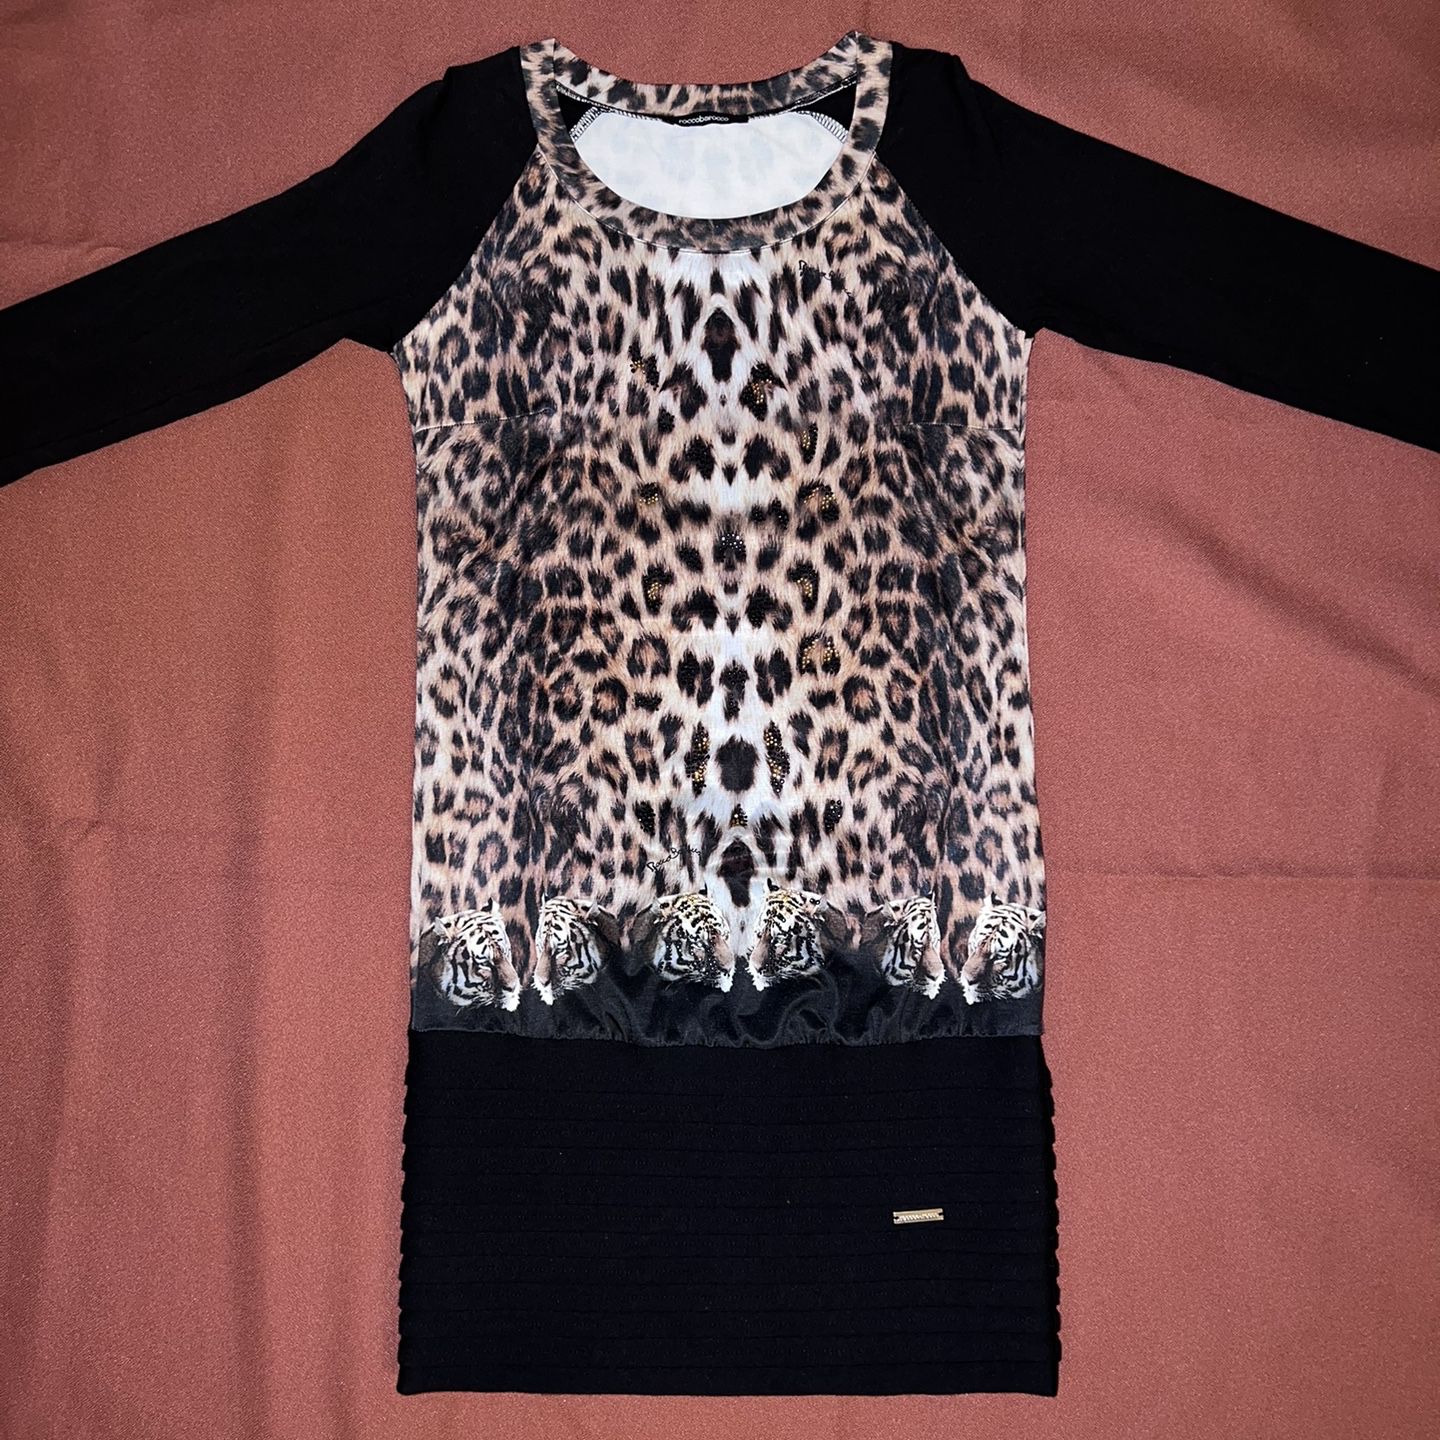 Roccobarocco Leopard Print Stretch Dress Size 4 (Worn once)